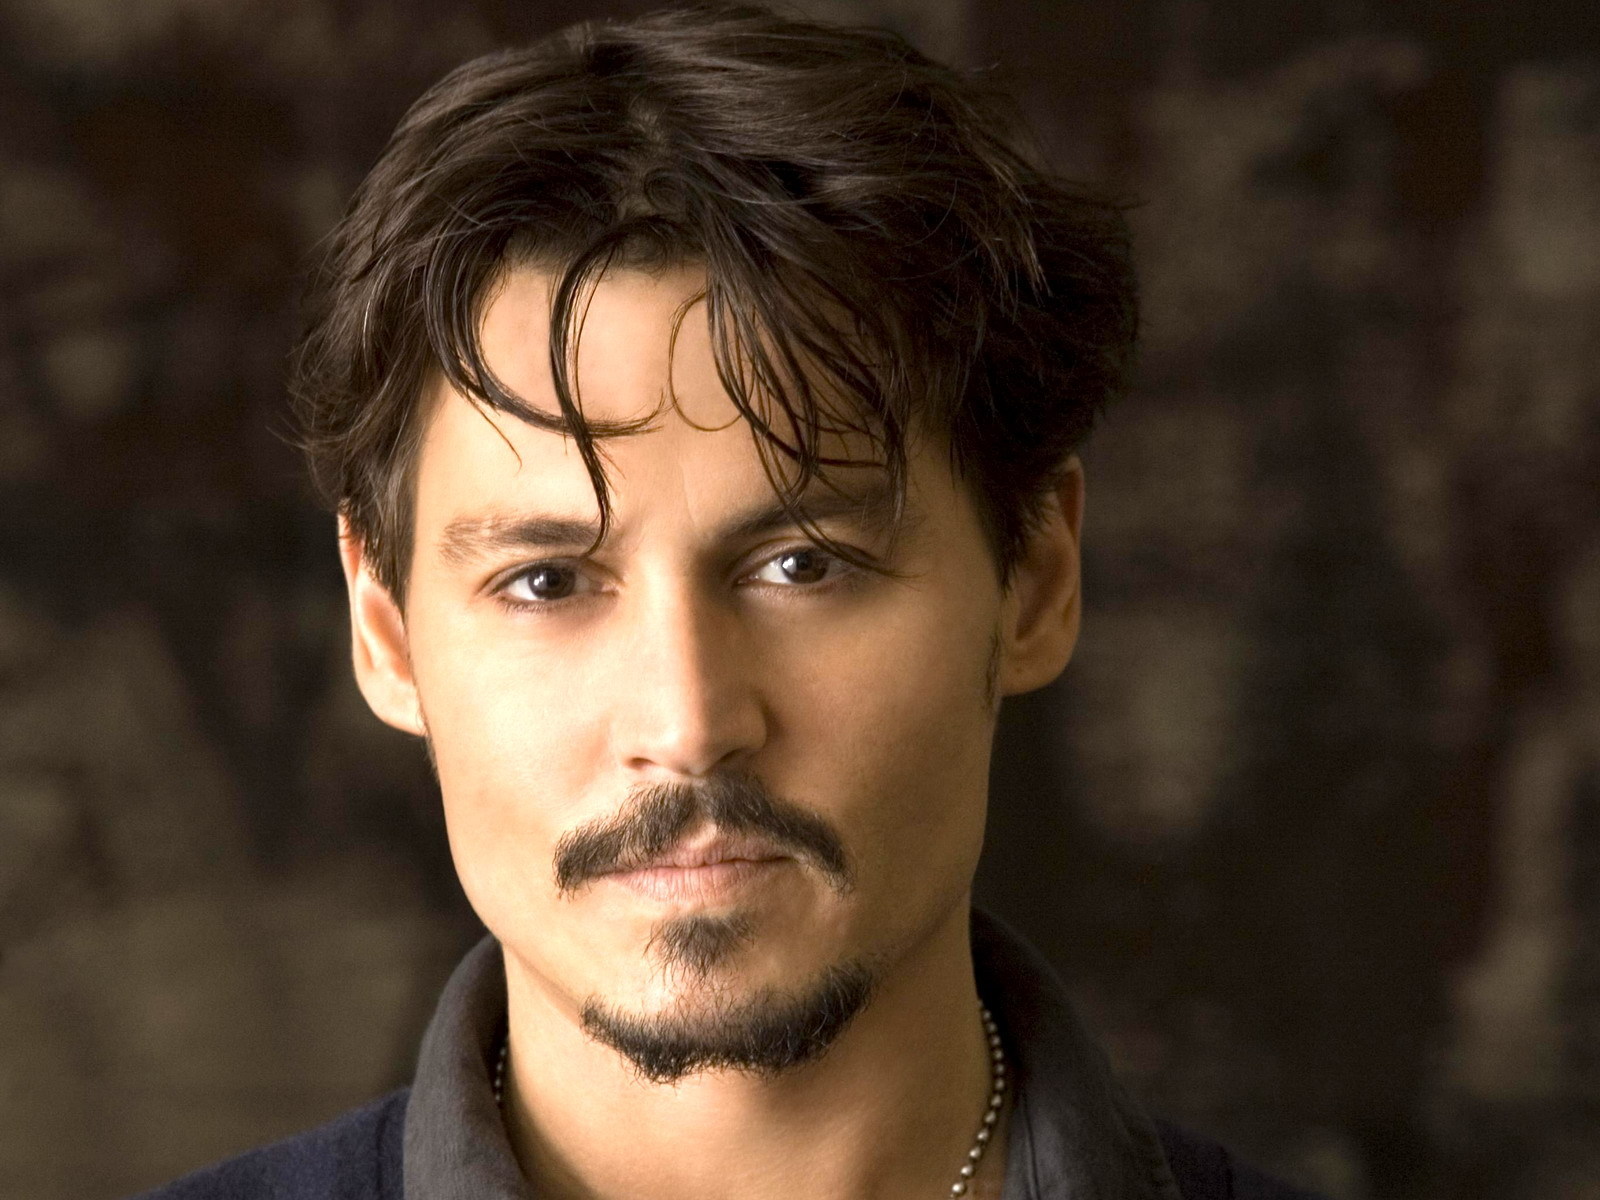 Johnny Depp Wallpaper HD In High Resolution For Get